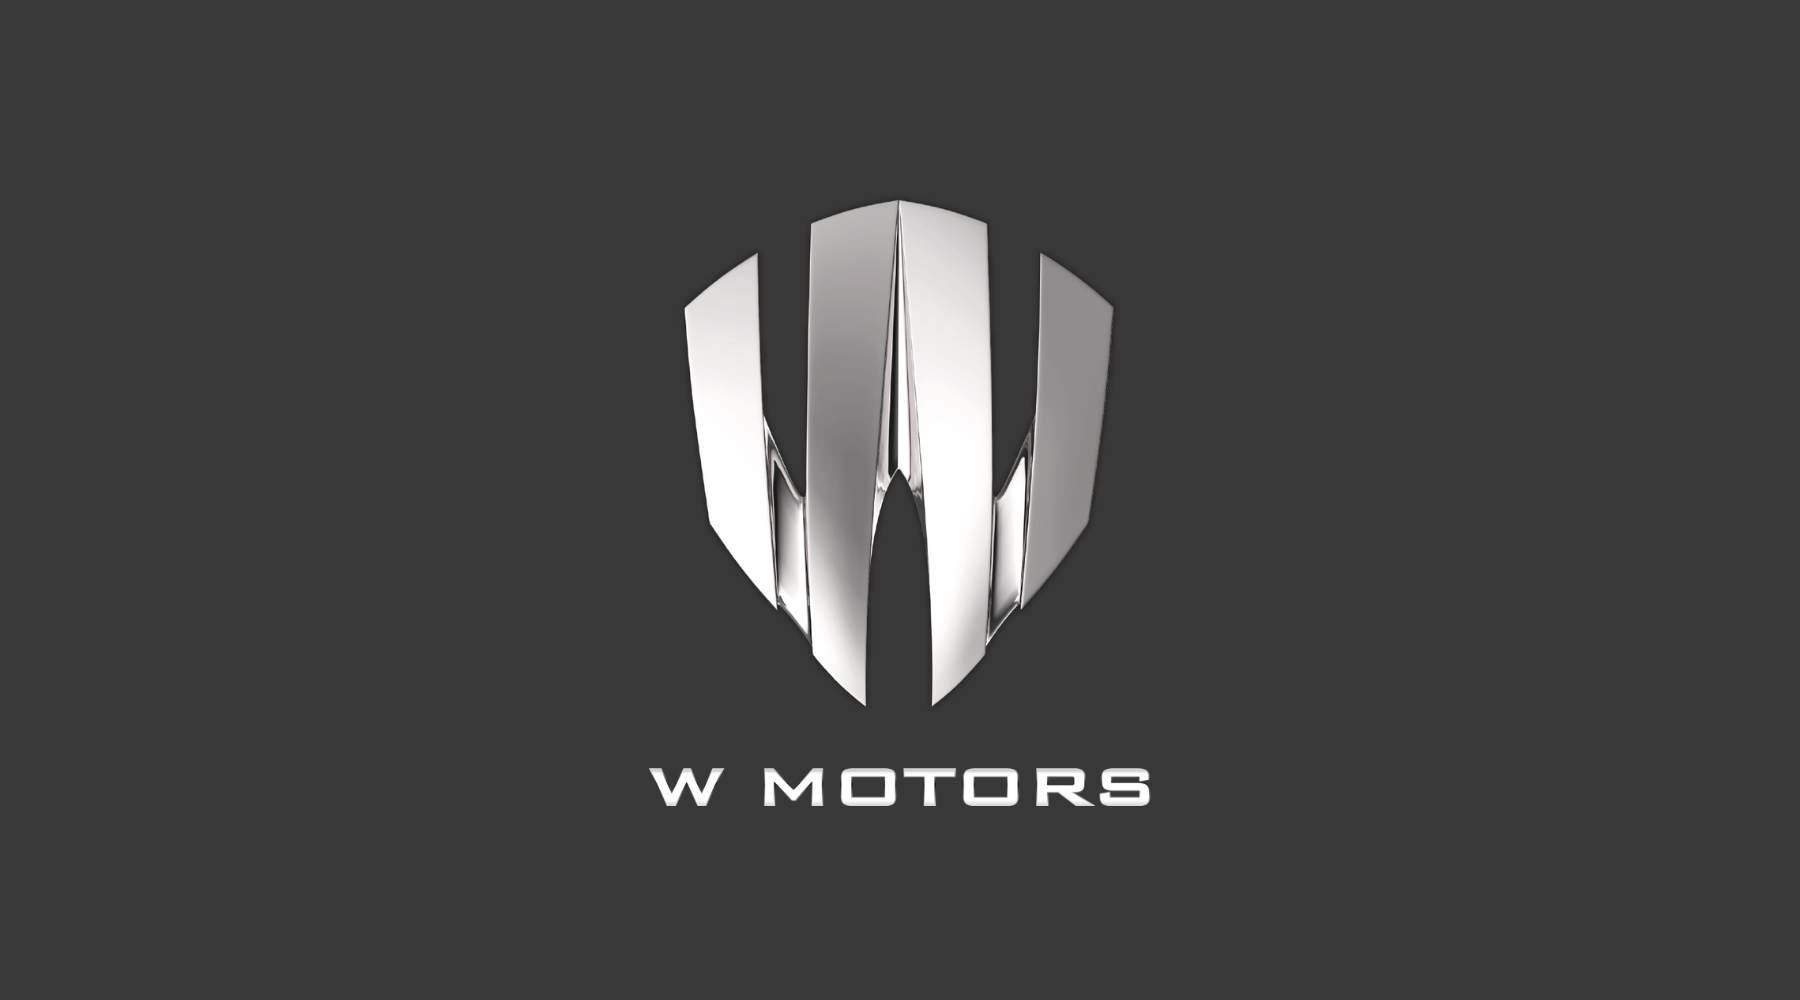 W Motors Ventures into the Metaverse